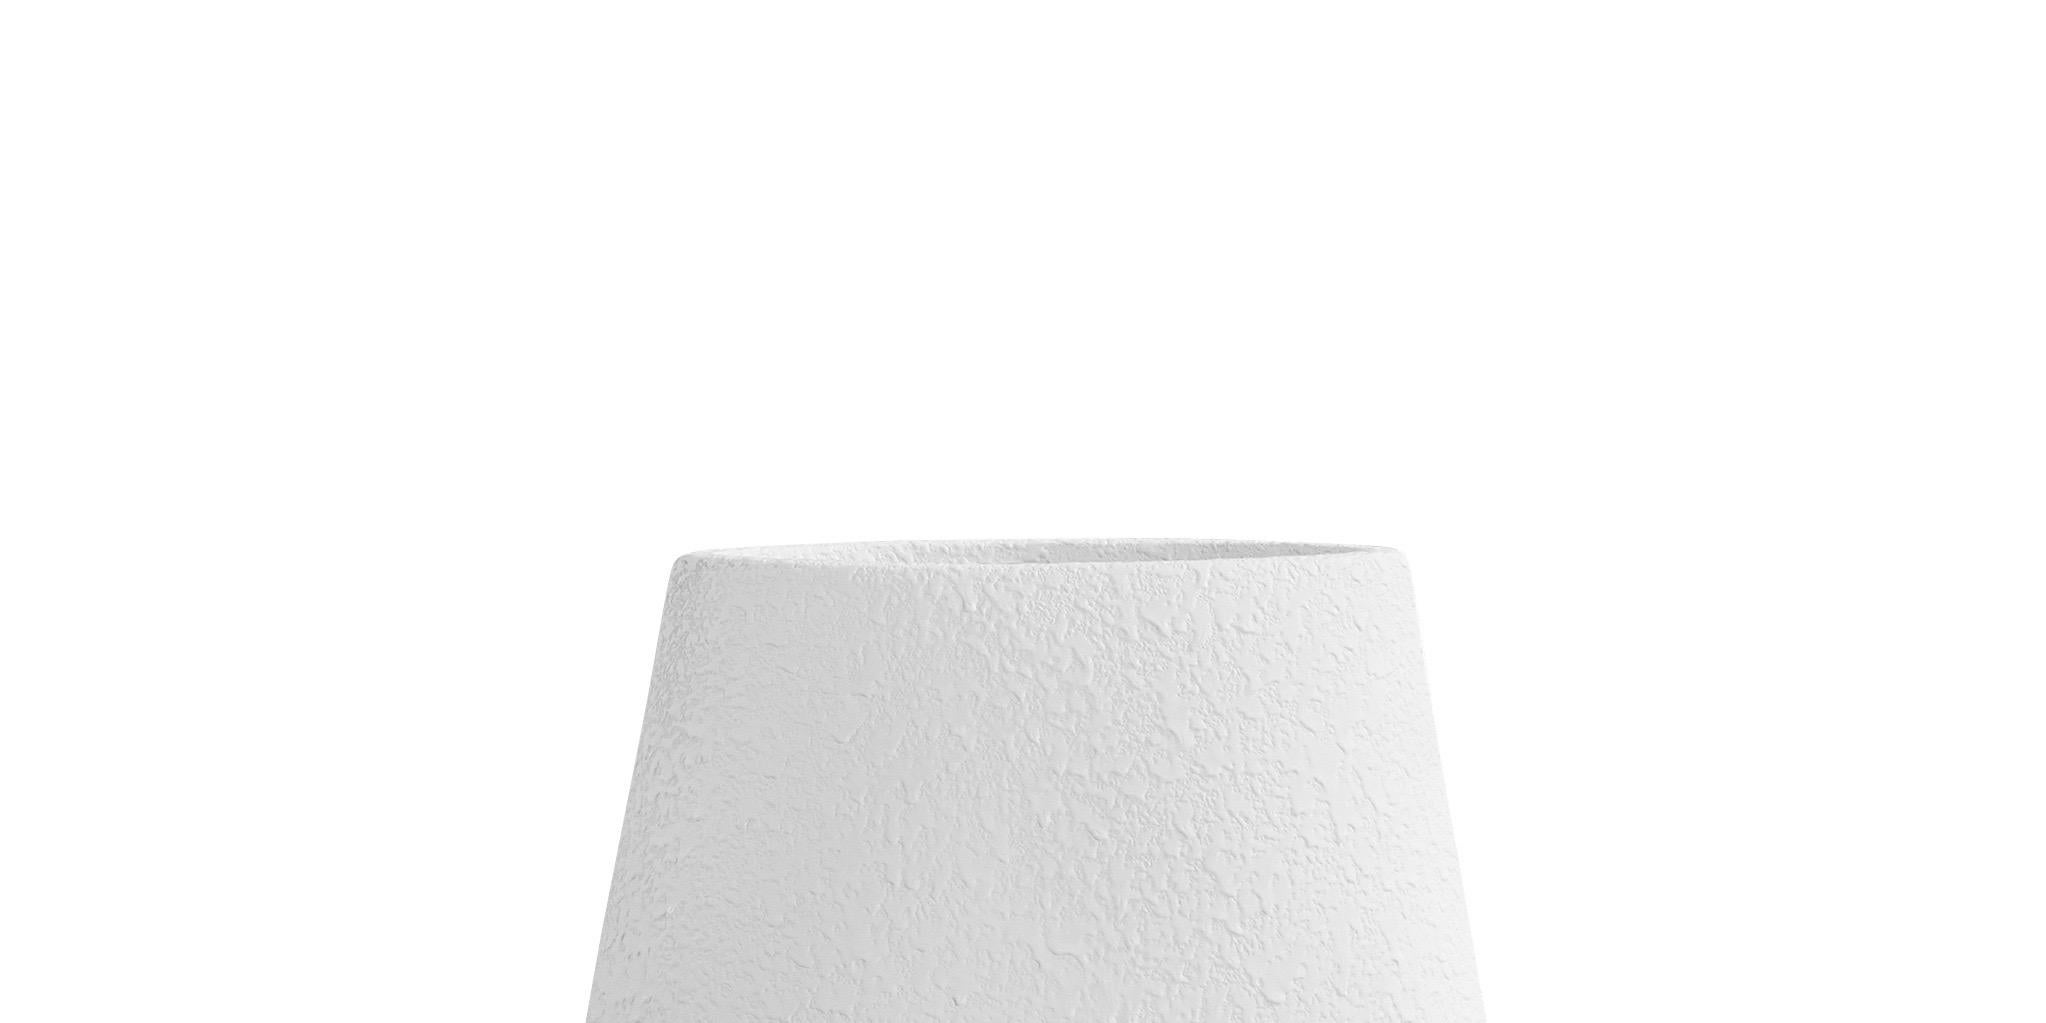 Chinese Textured White Arrow Shaped Ceramic Danish Design Vase, Denmark, Contemporary